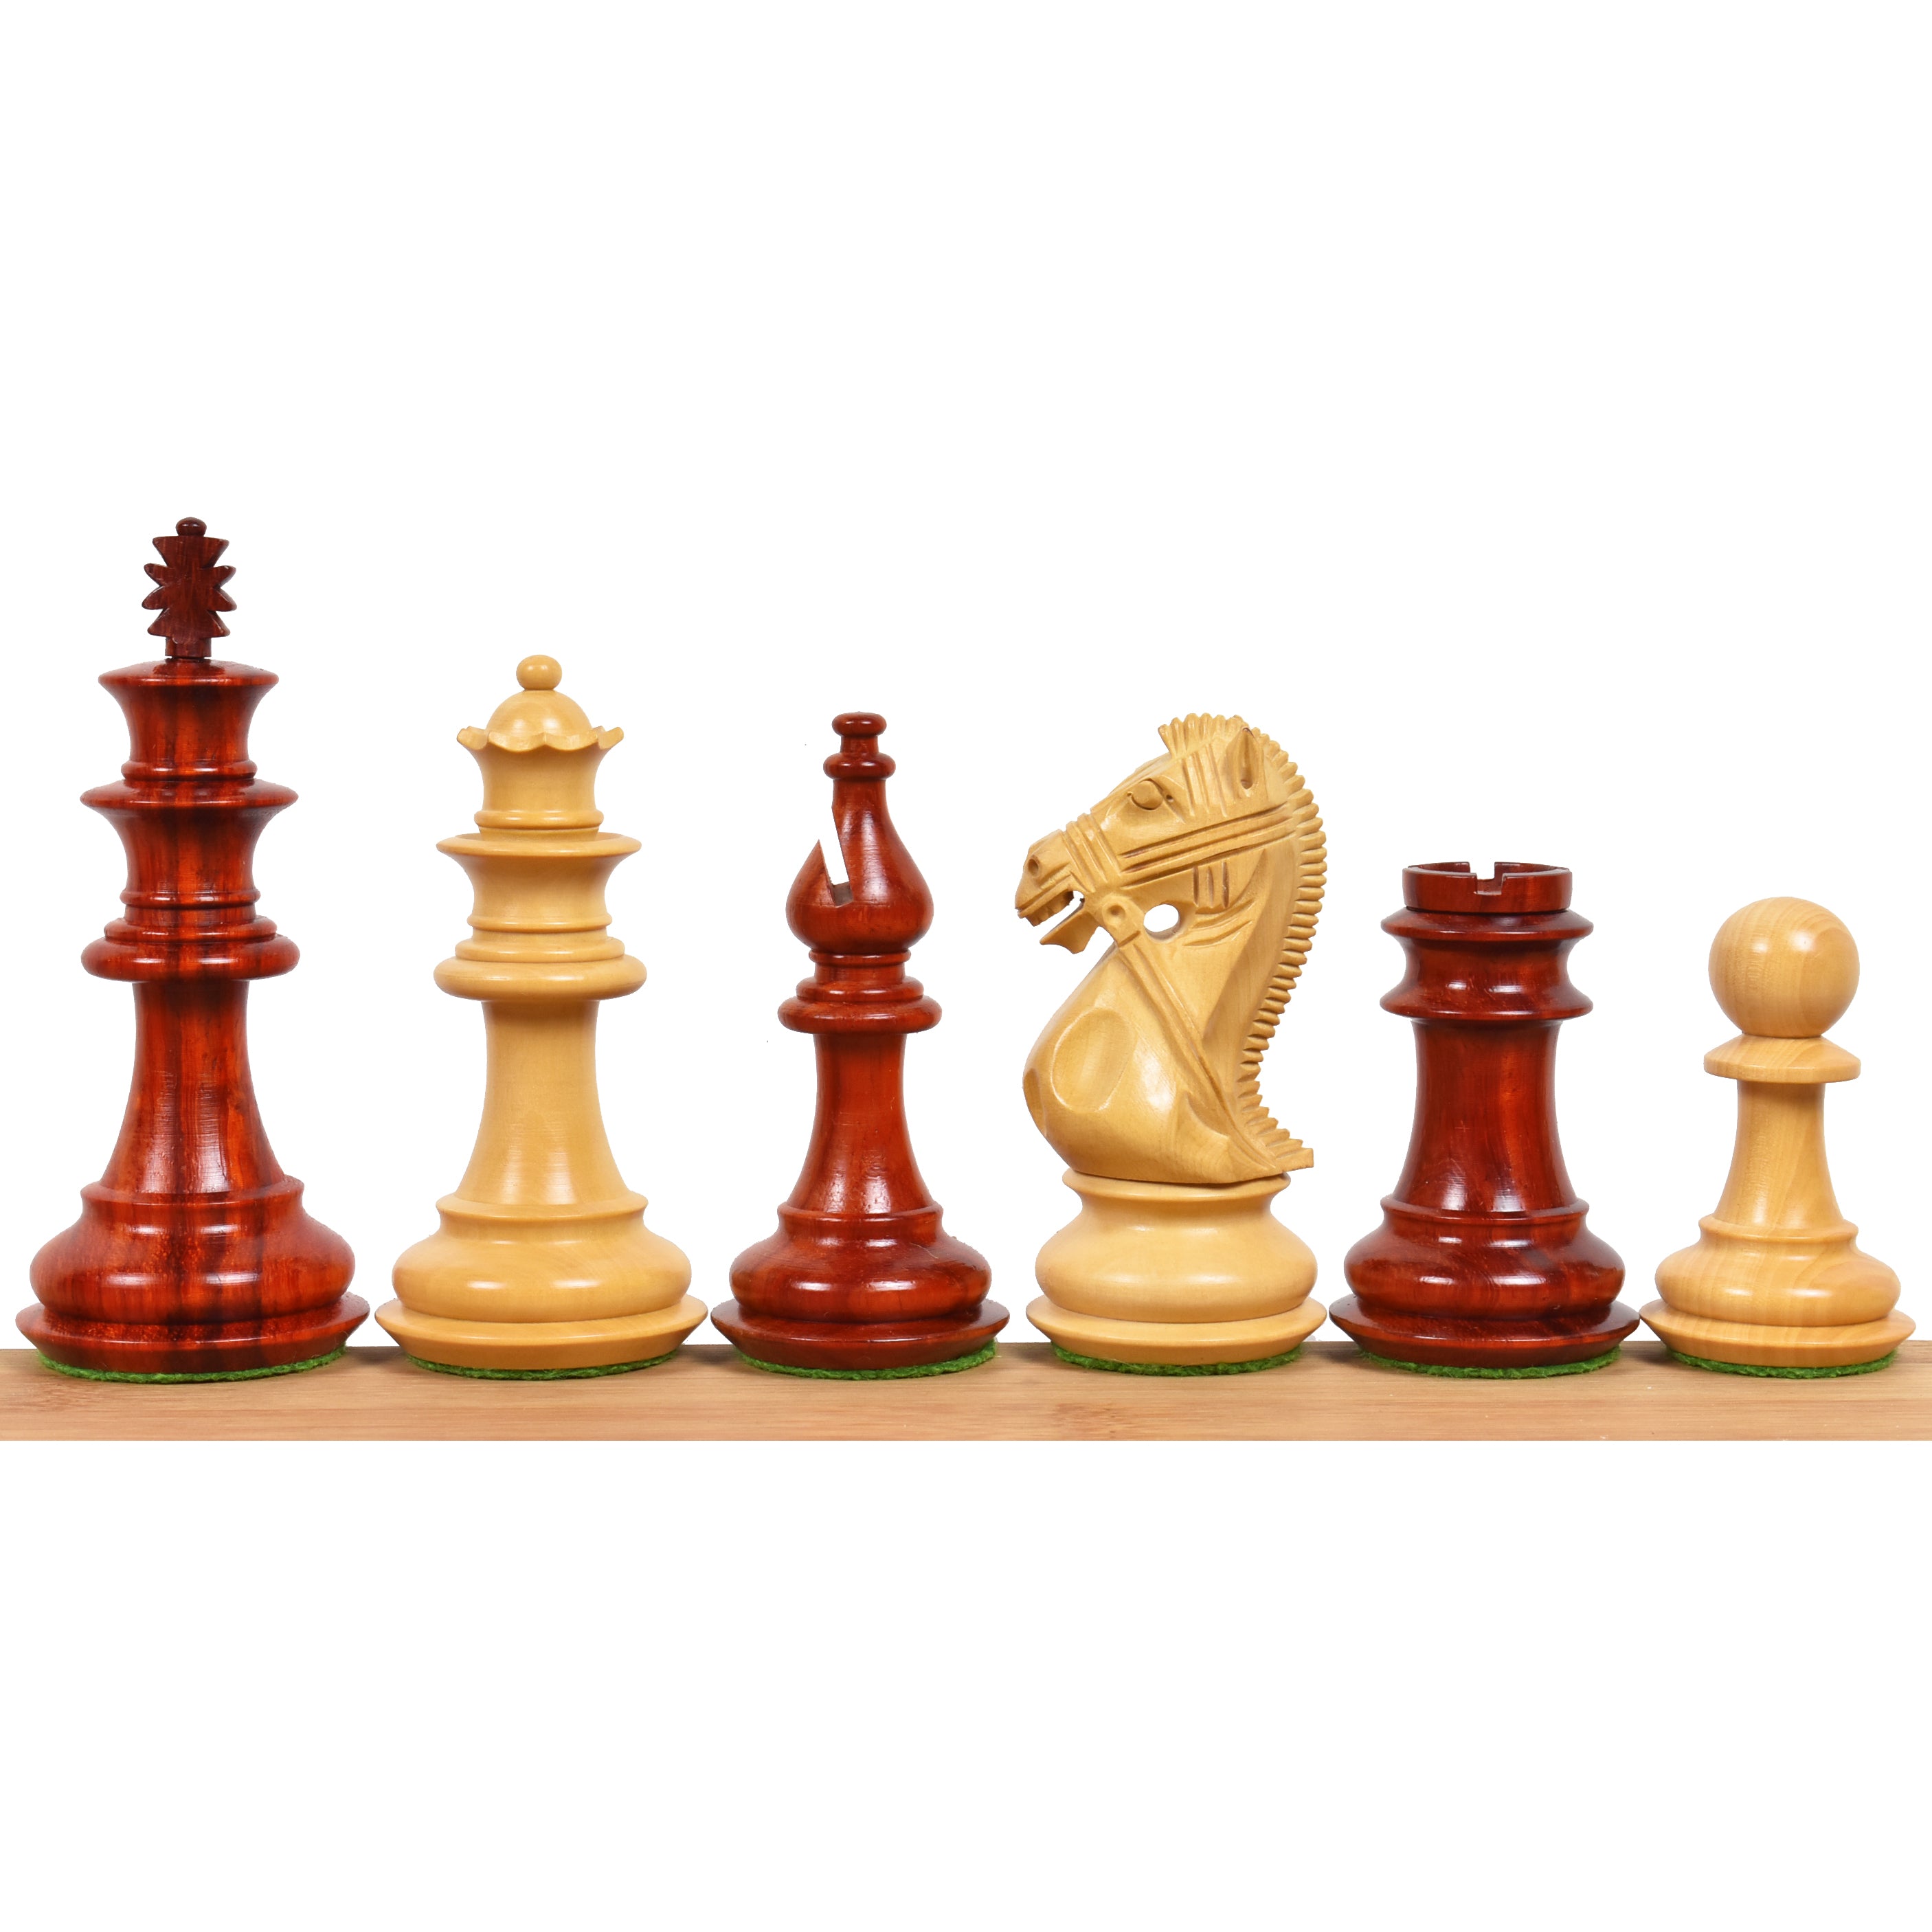 Supreme Staunton Luxury Chess Pieces Only set